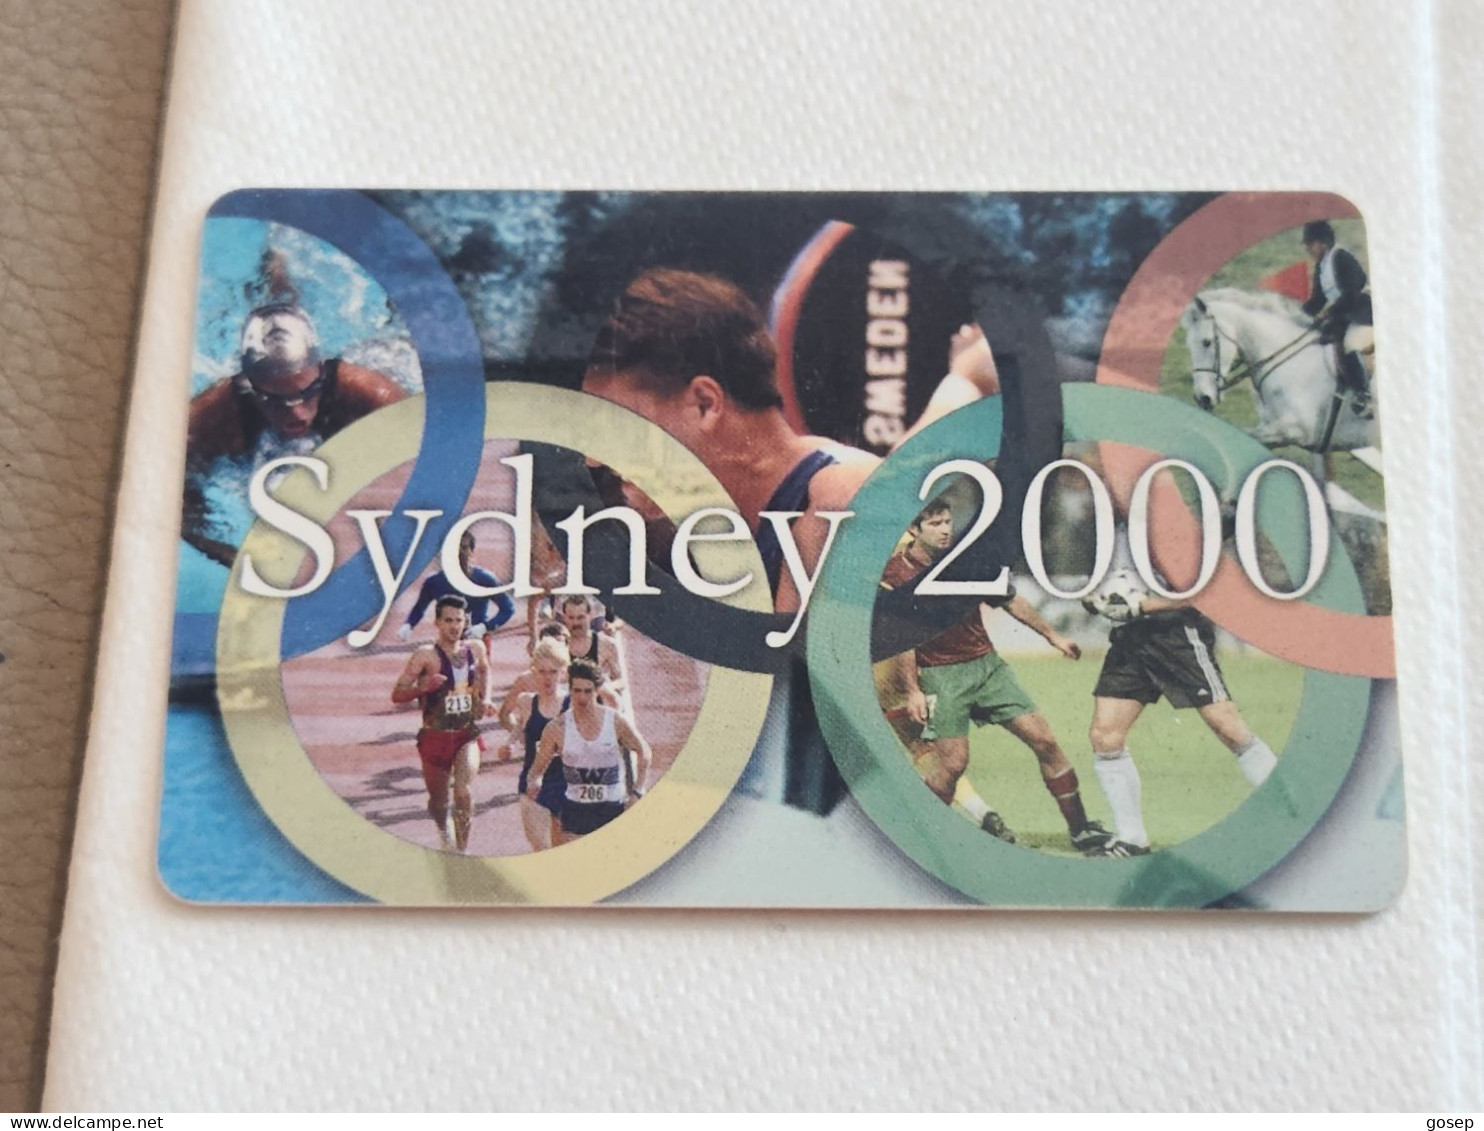 ROMANIA-(RO-ROM-0067A)-Sydney 2000-(Red)-(74)-(50.000 Lei)-(J99MV9)-used Card+1card Prepiad Free - Rumänien